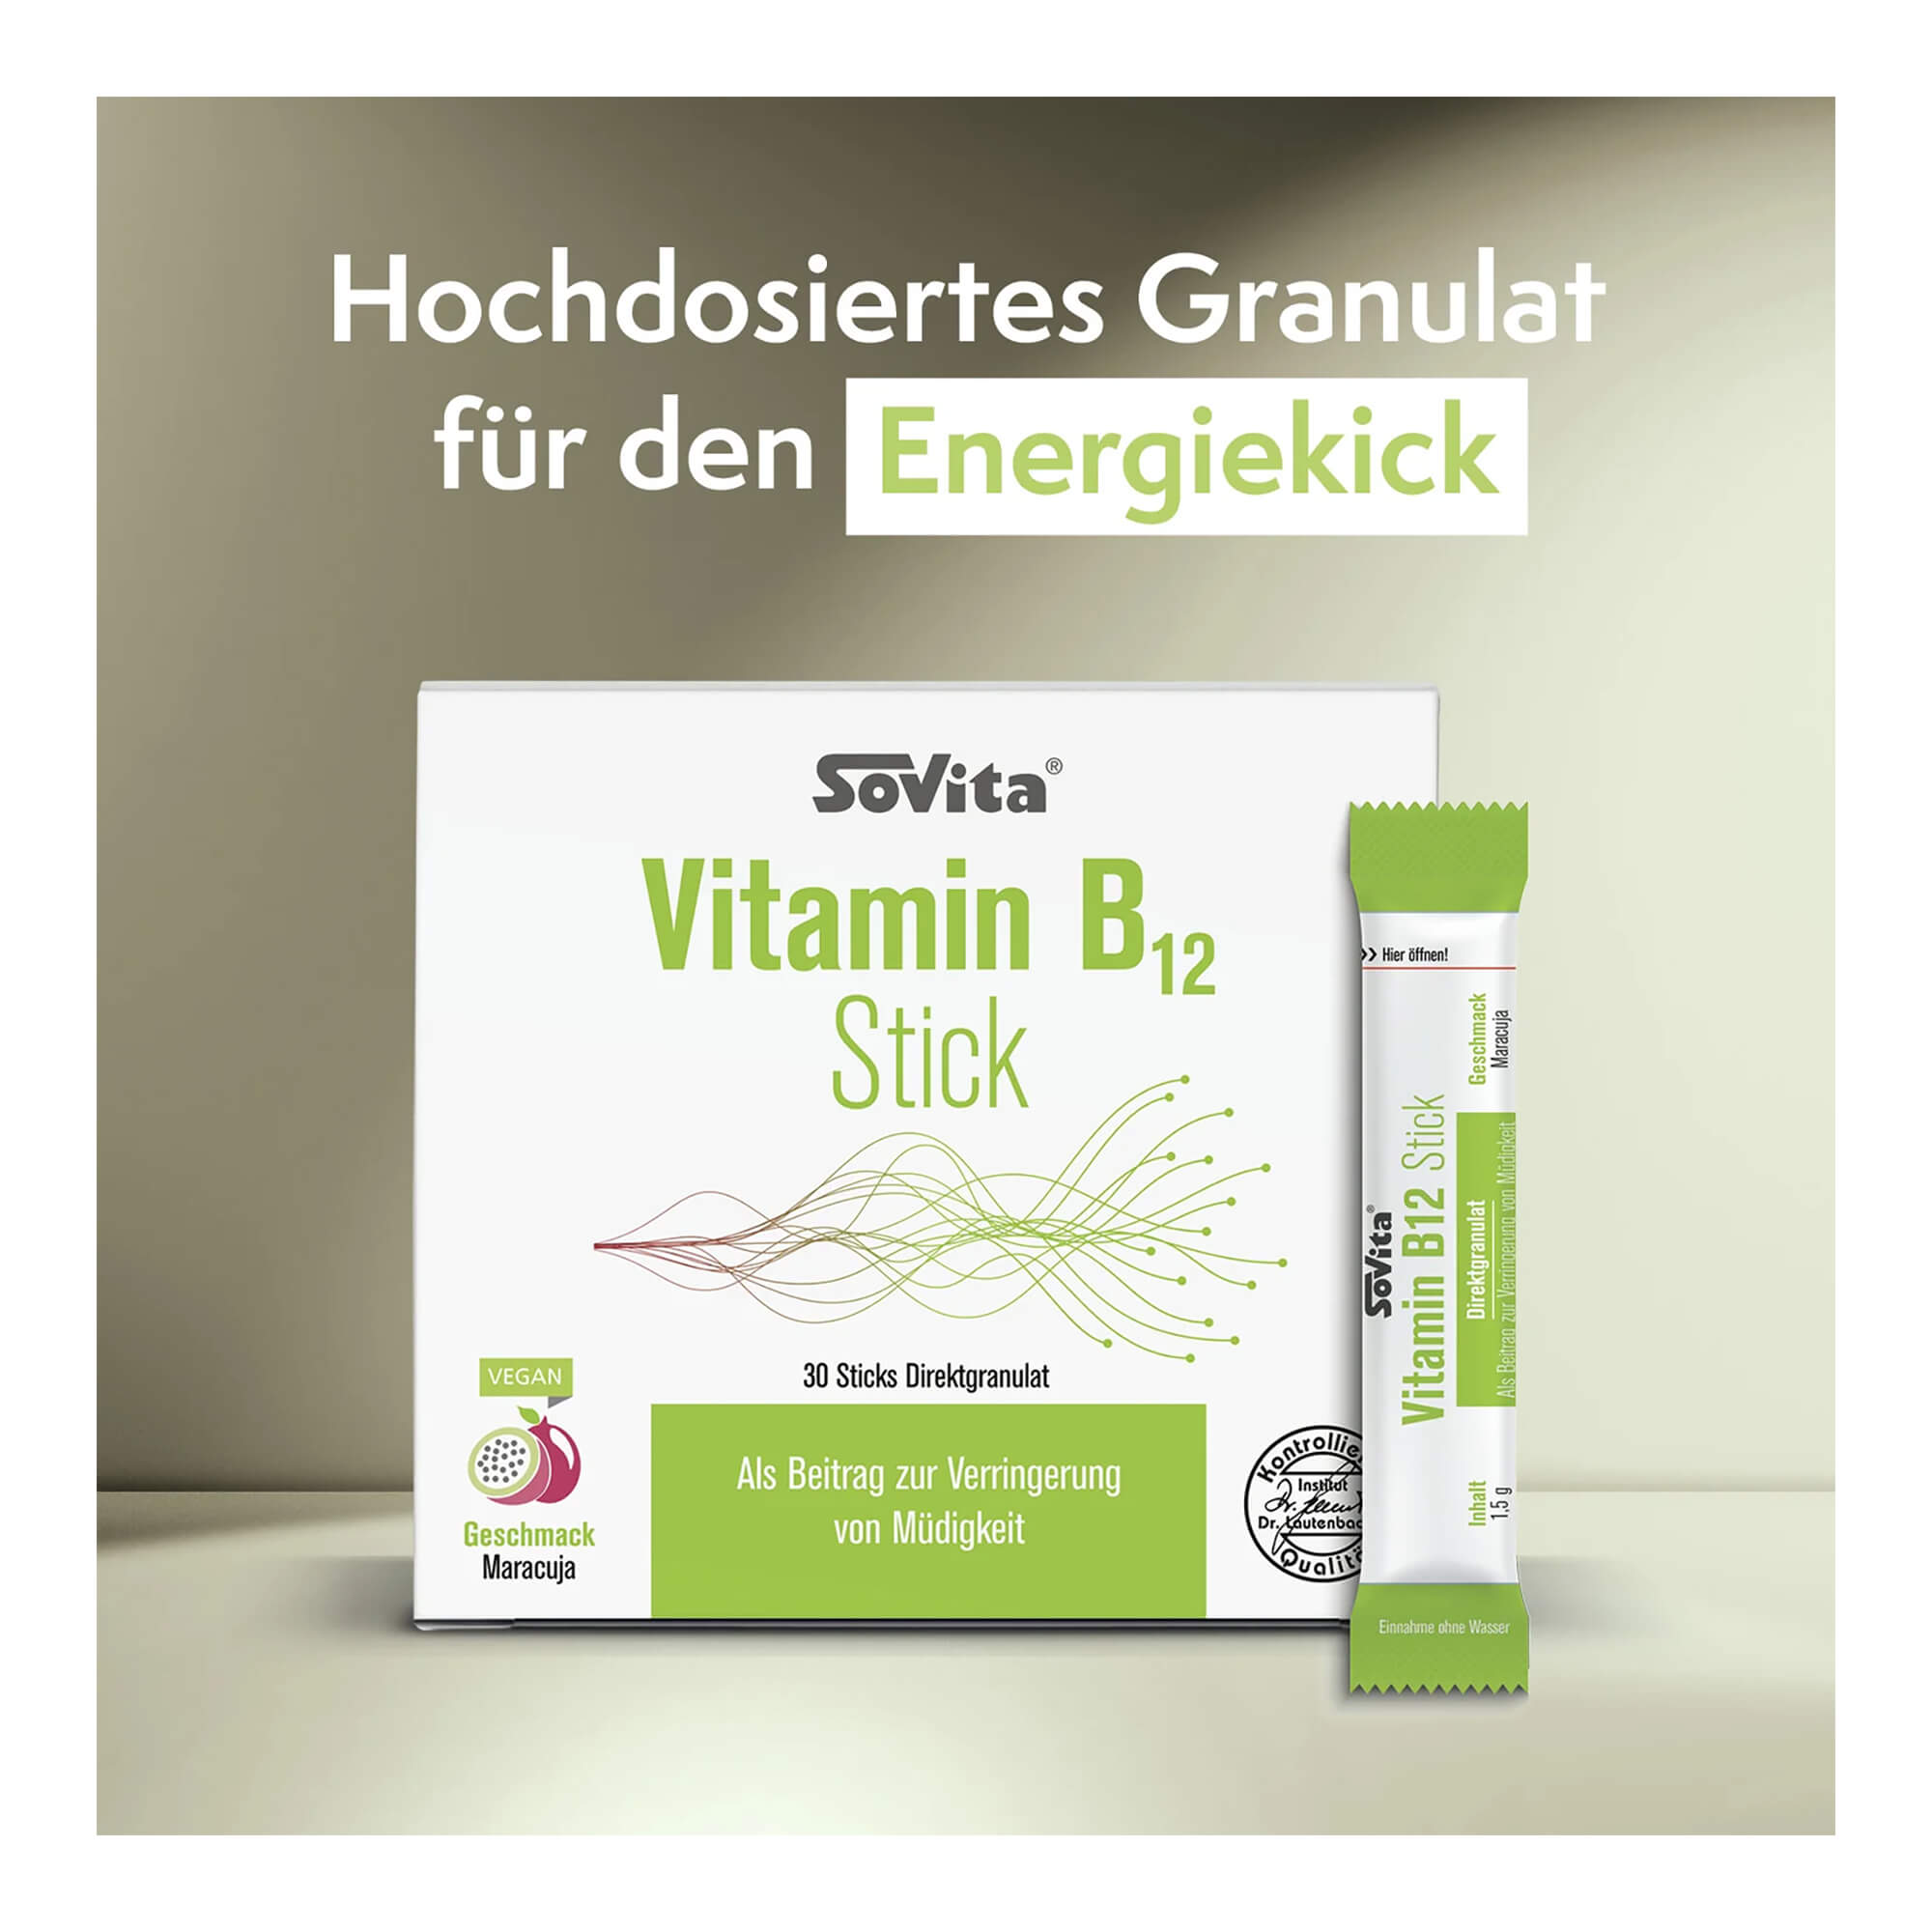 Grafik Sovita Vitamin B12 Stick Hochdosiertes Granulat für den Energiekick